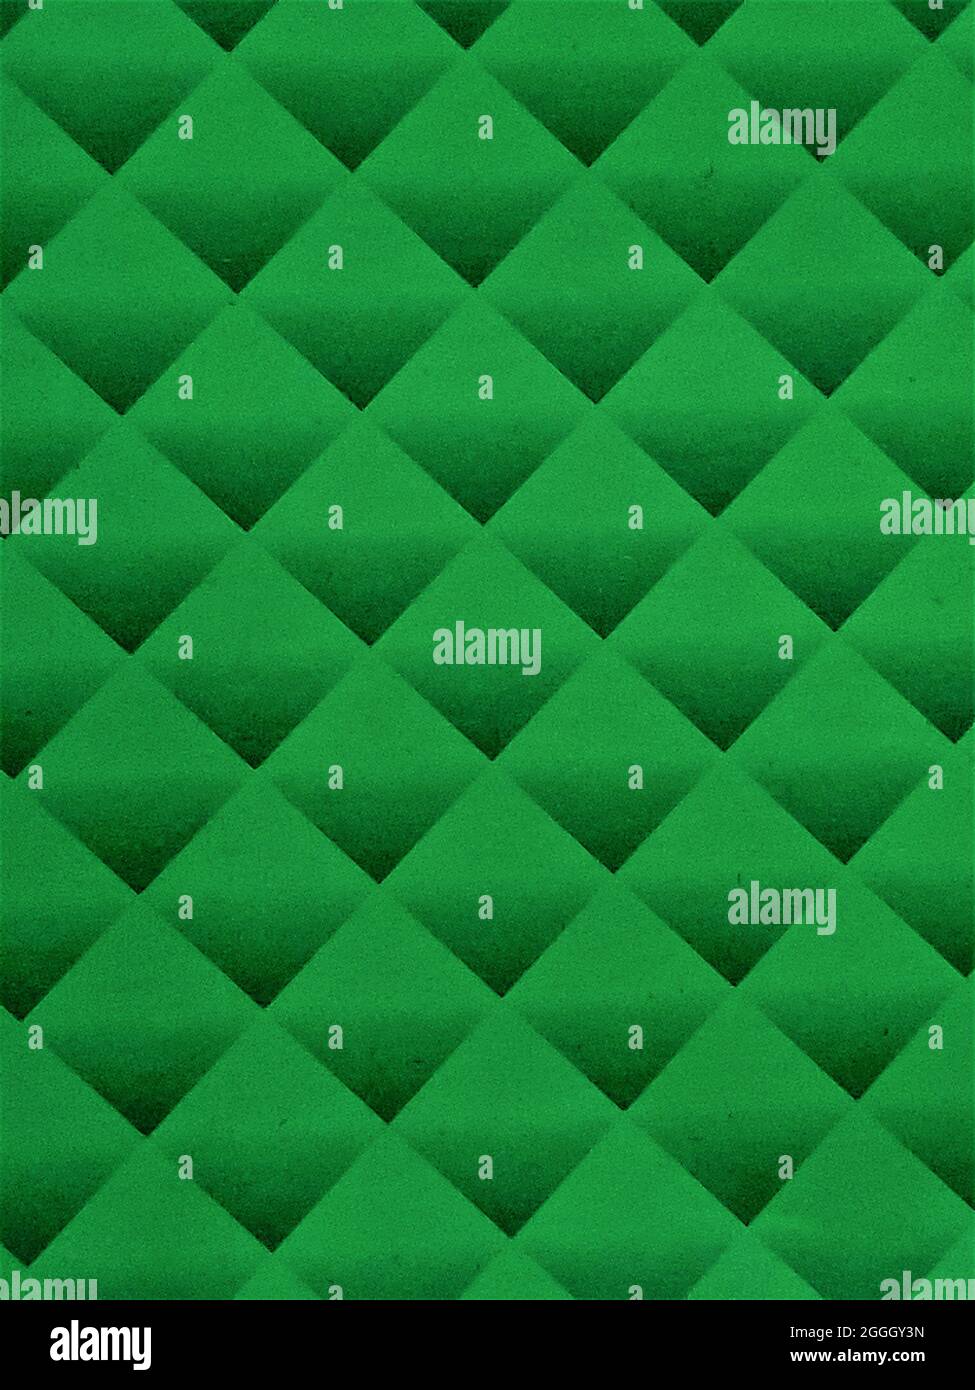 Hintergrundbild Computergrafik Karomuster Quadrate Farbe Grün mit Schatten Stock Photo